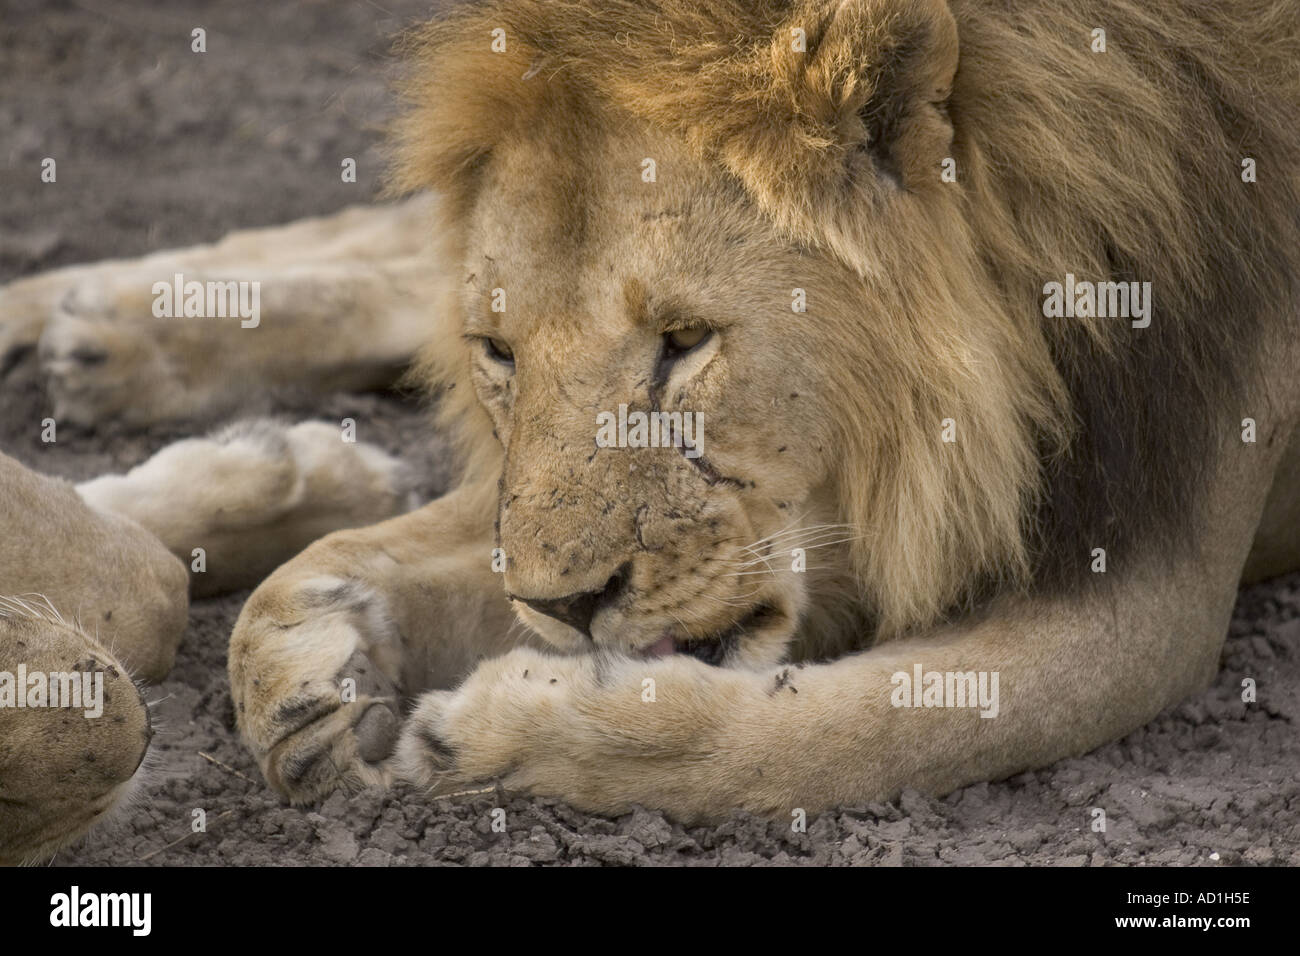 Homme Lion licking paw Panthera leo roi des animaux Banque D'Images